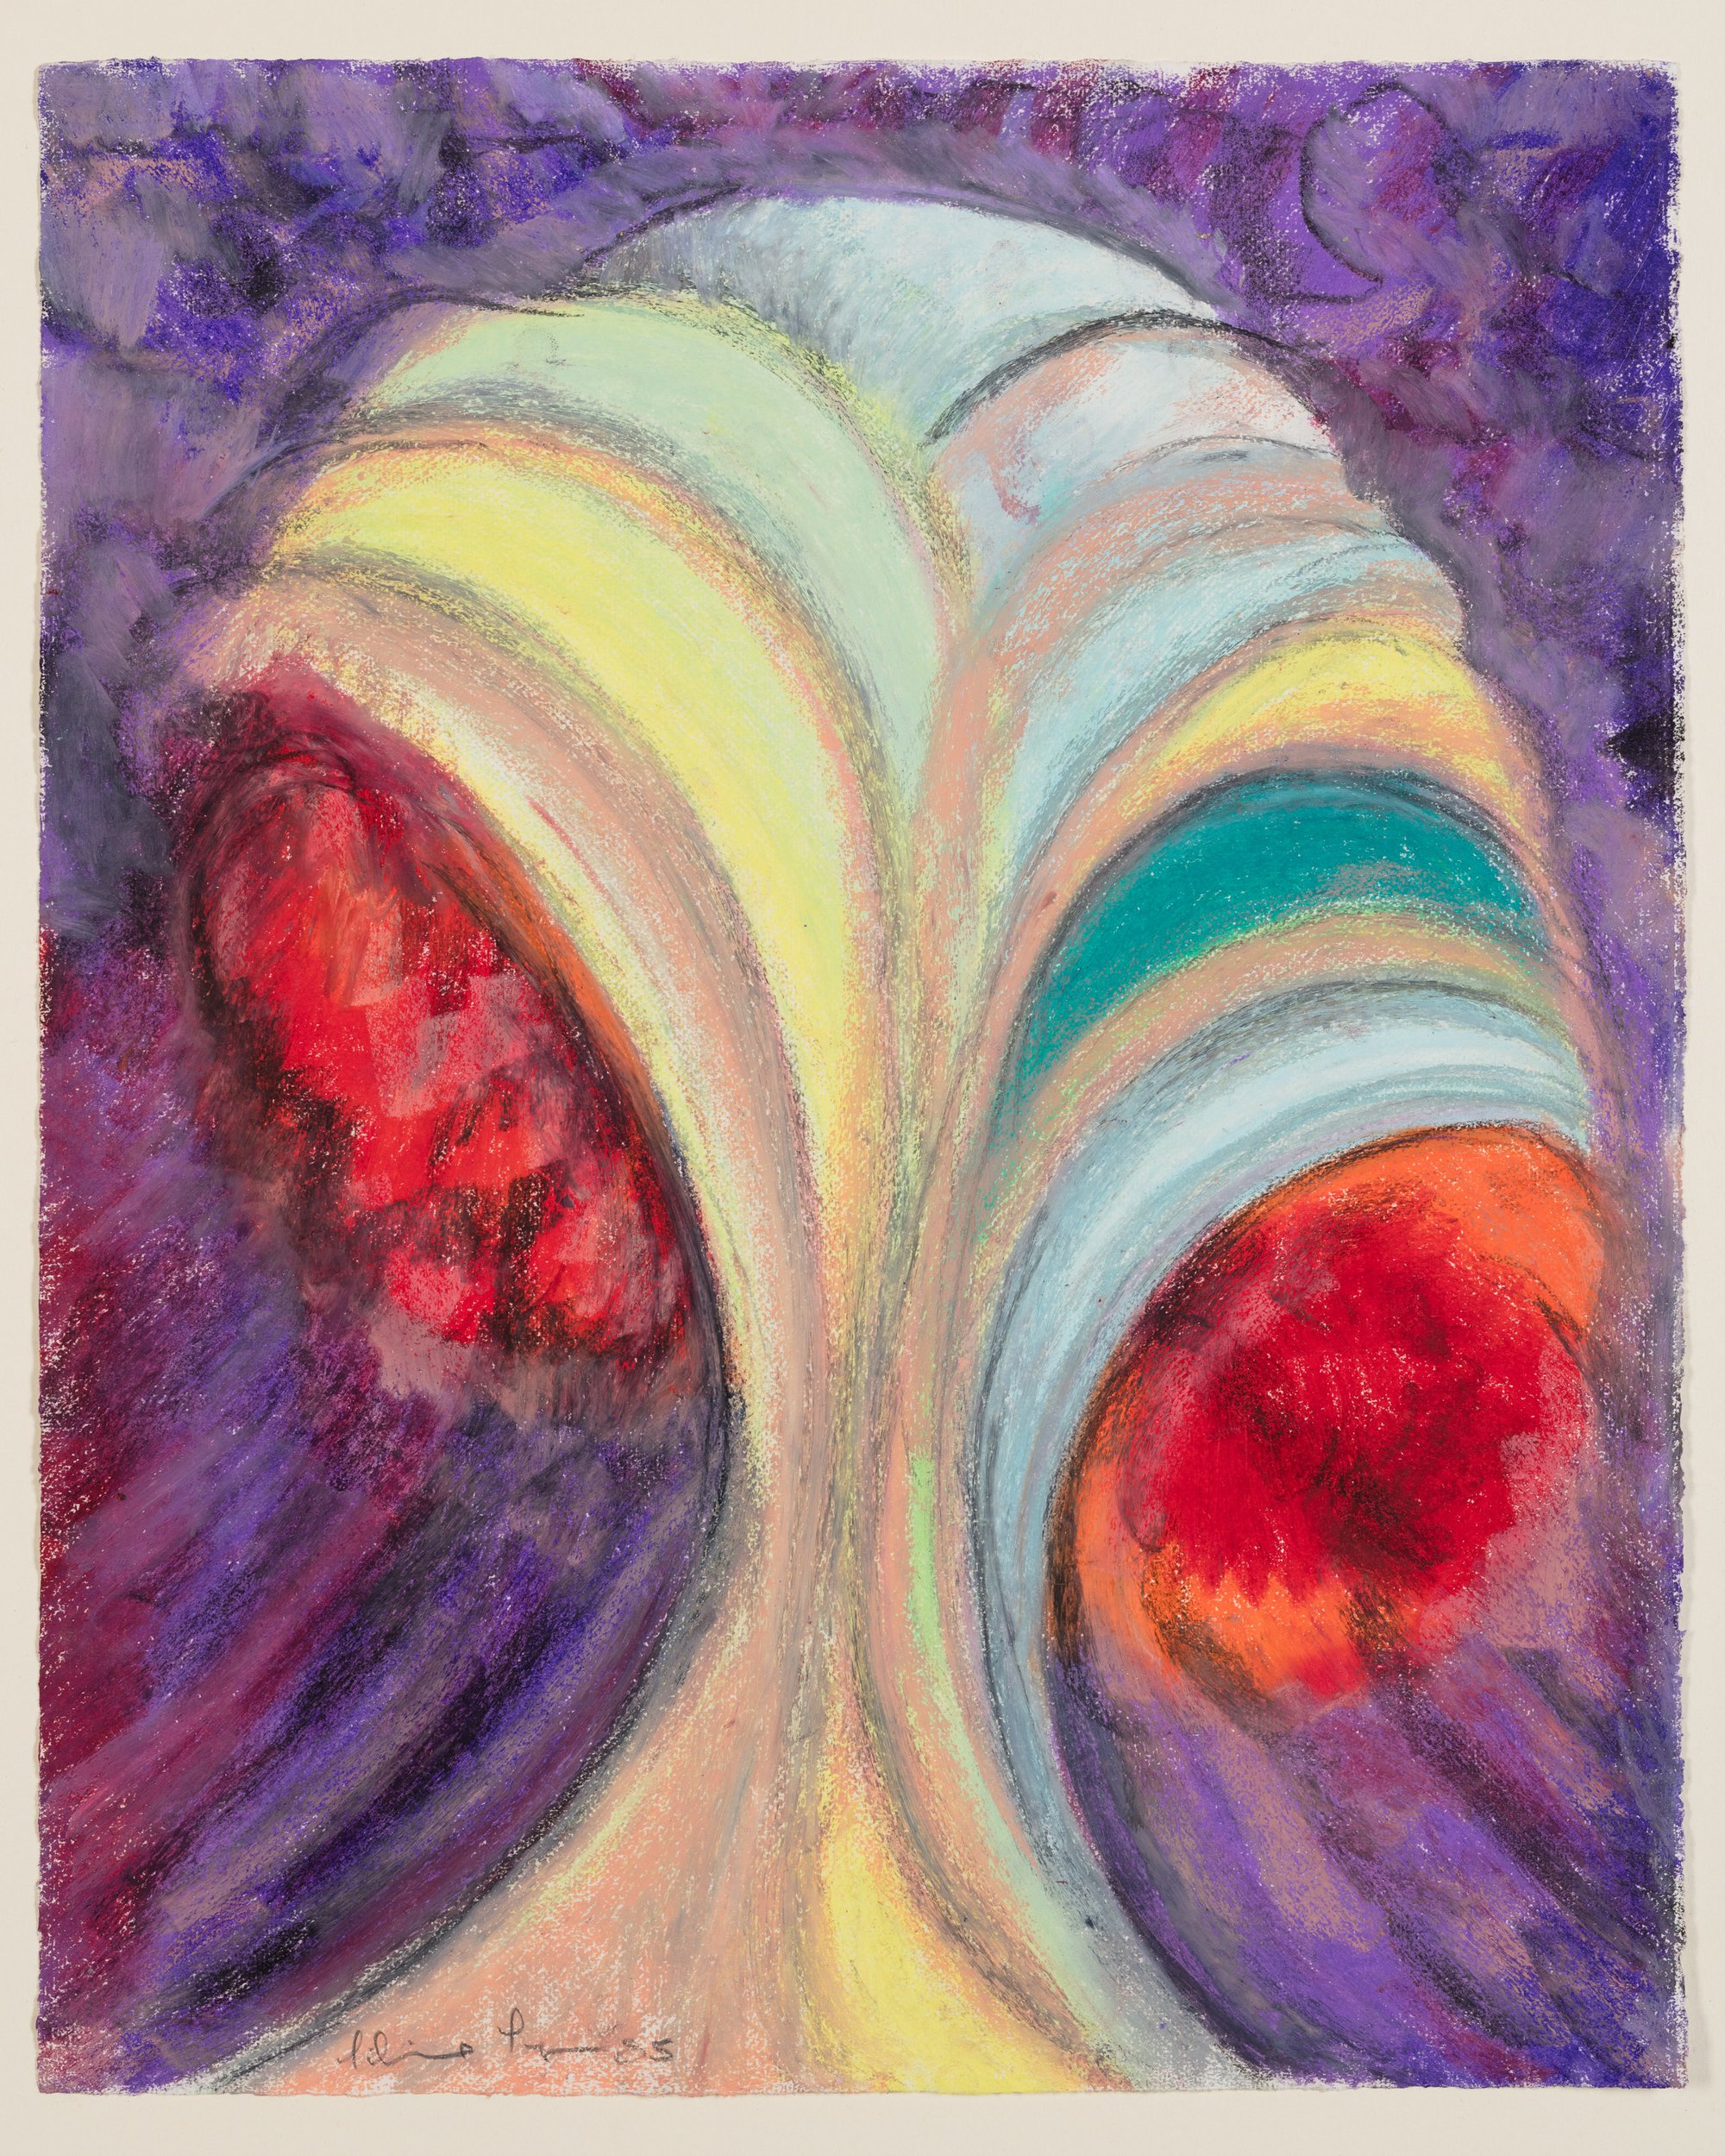 Liliane Lijn, She, oil pastel on Whatman paper, 52 x 43 cm framed (20.47 x 16.92 in framed), 1984